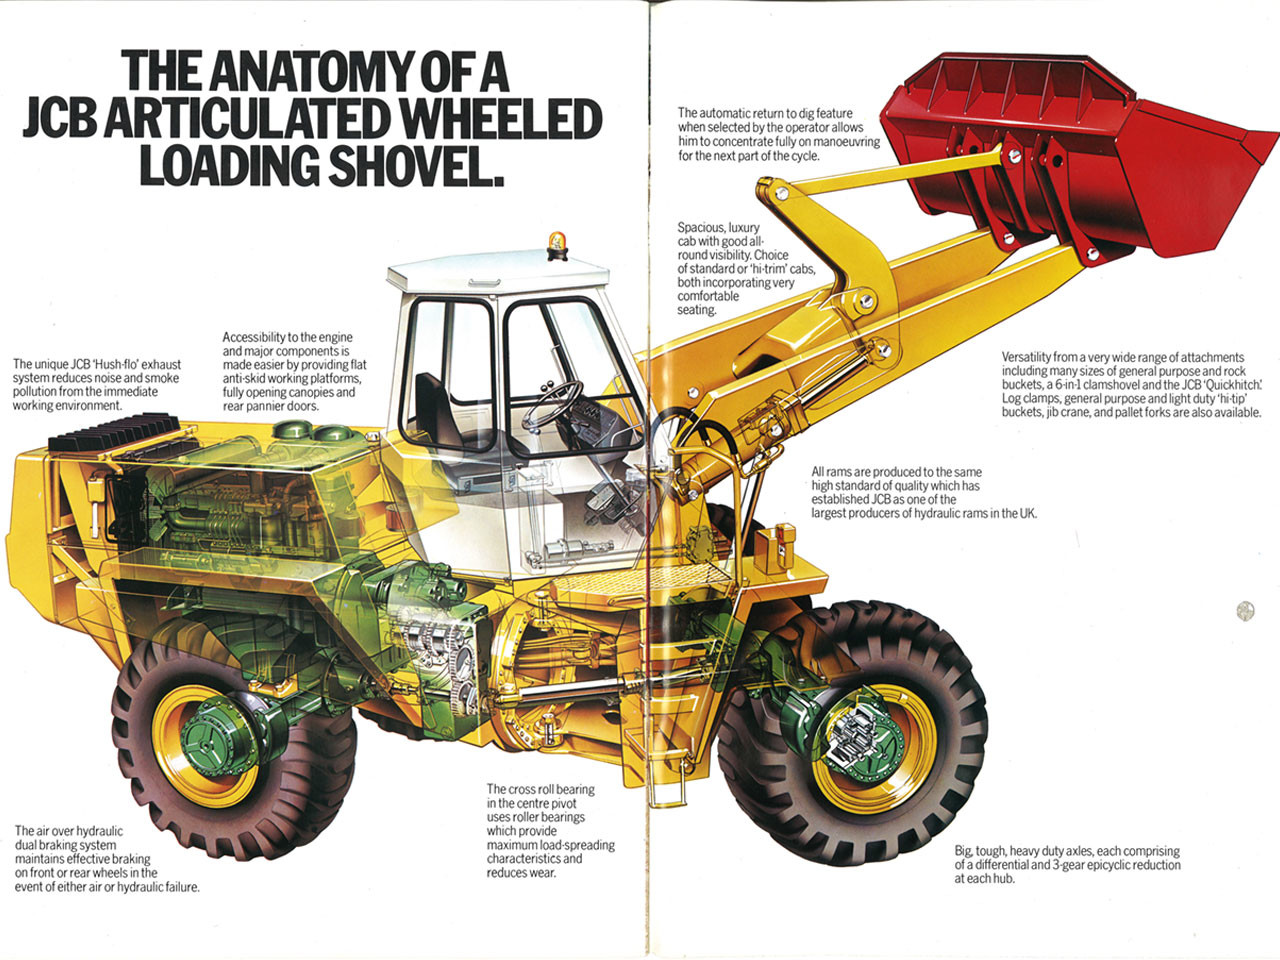 La pala gommata Jcb compie 50 anni 1680x1260_1558611171_1973---the-anatomy-of-a-jcb-articulated-wheeled-loading-shovel